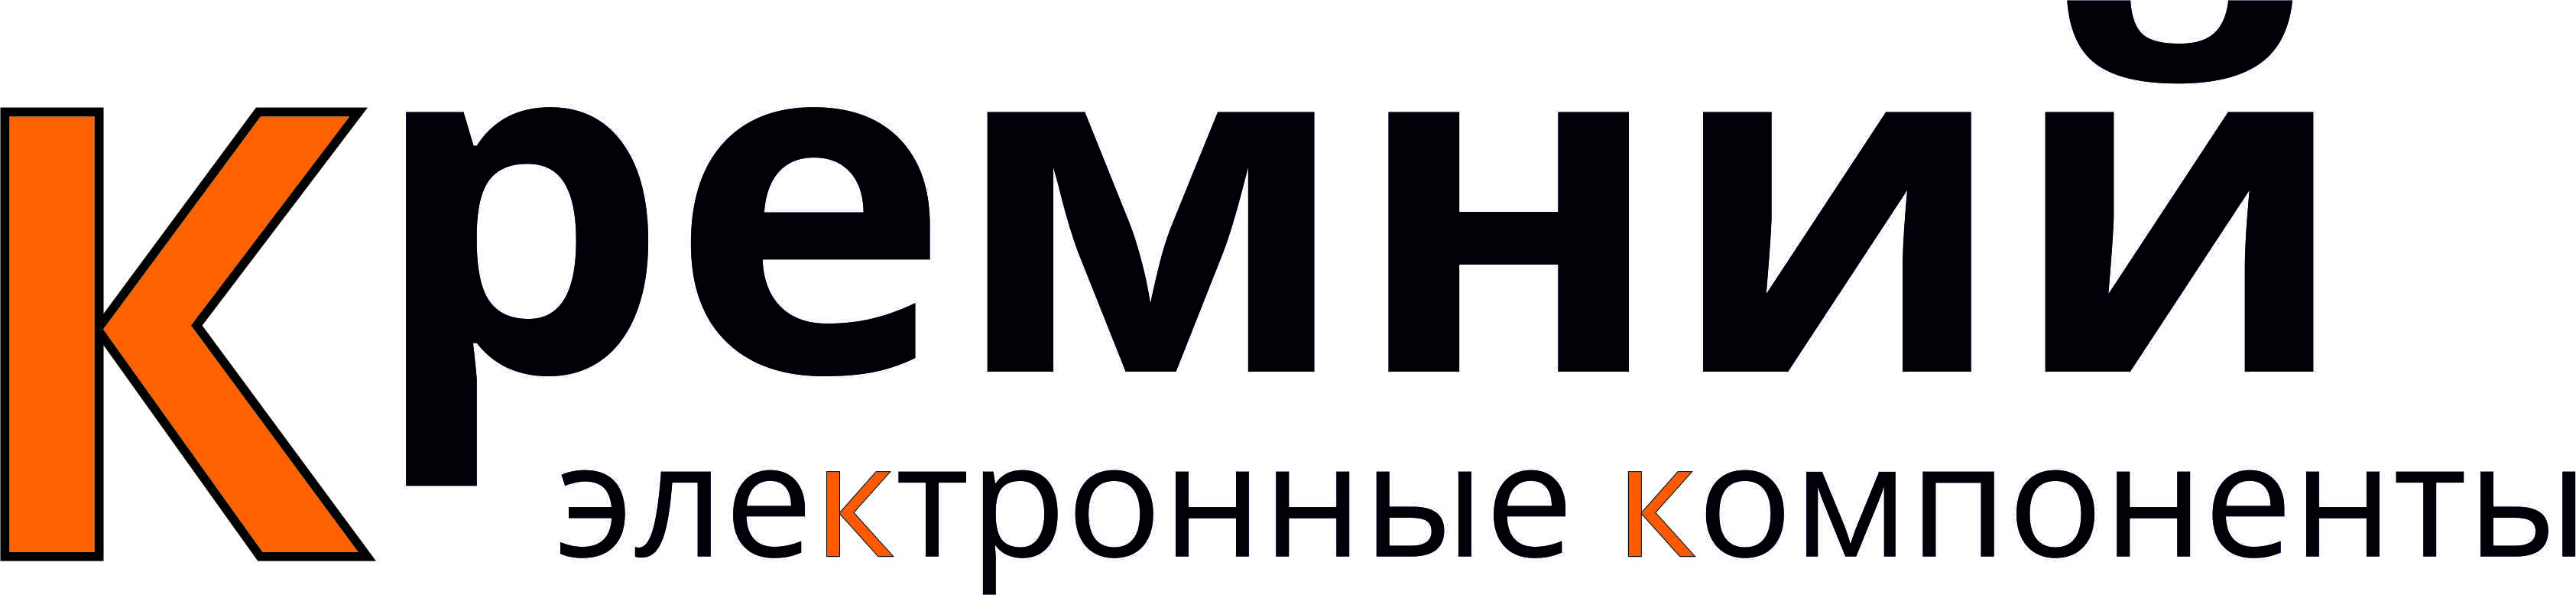 Логотип компании Кремний